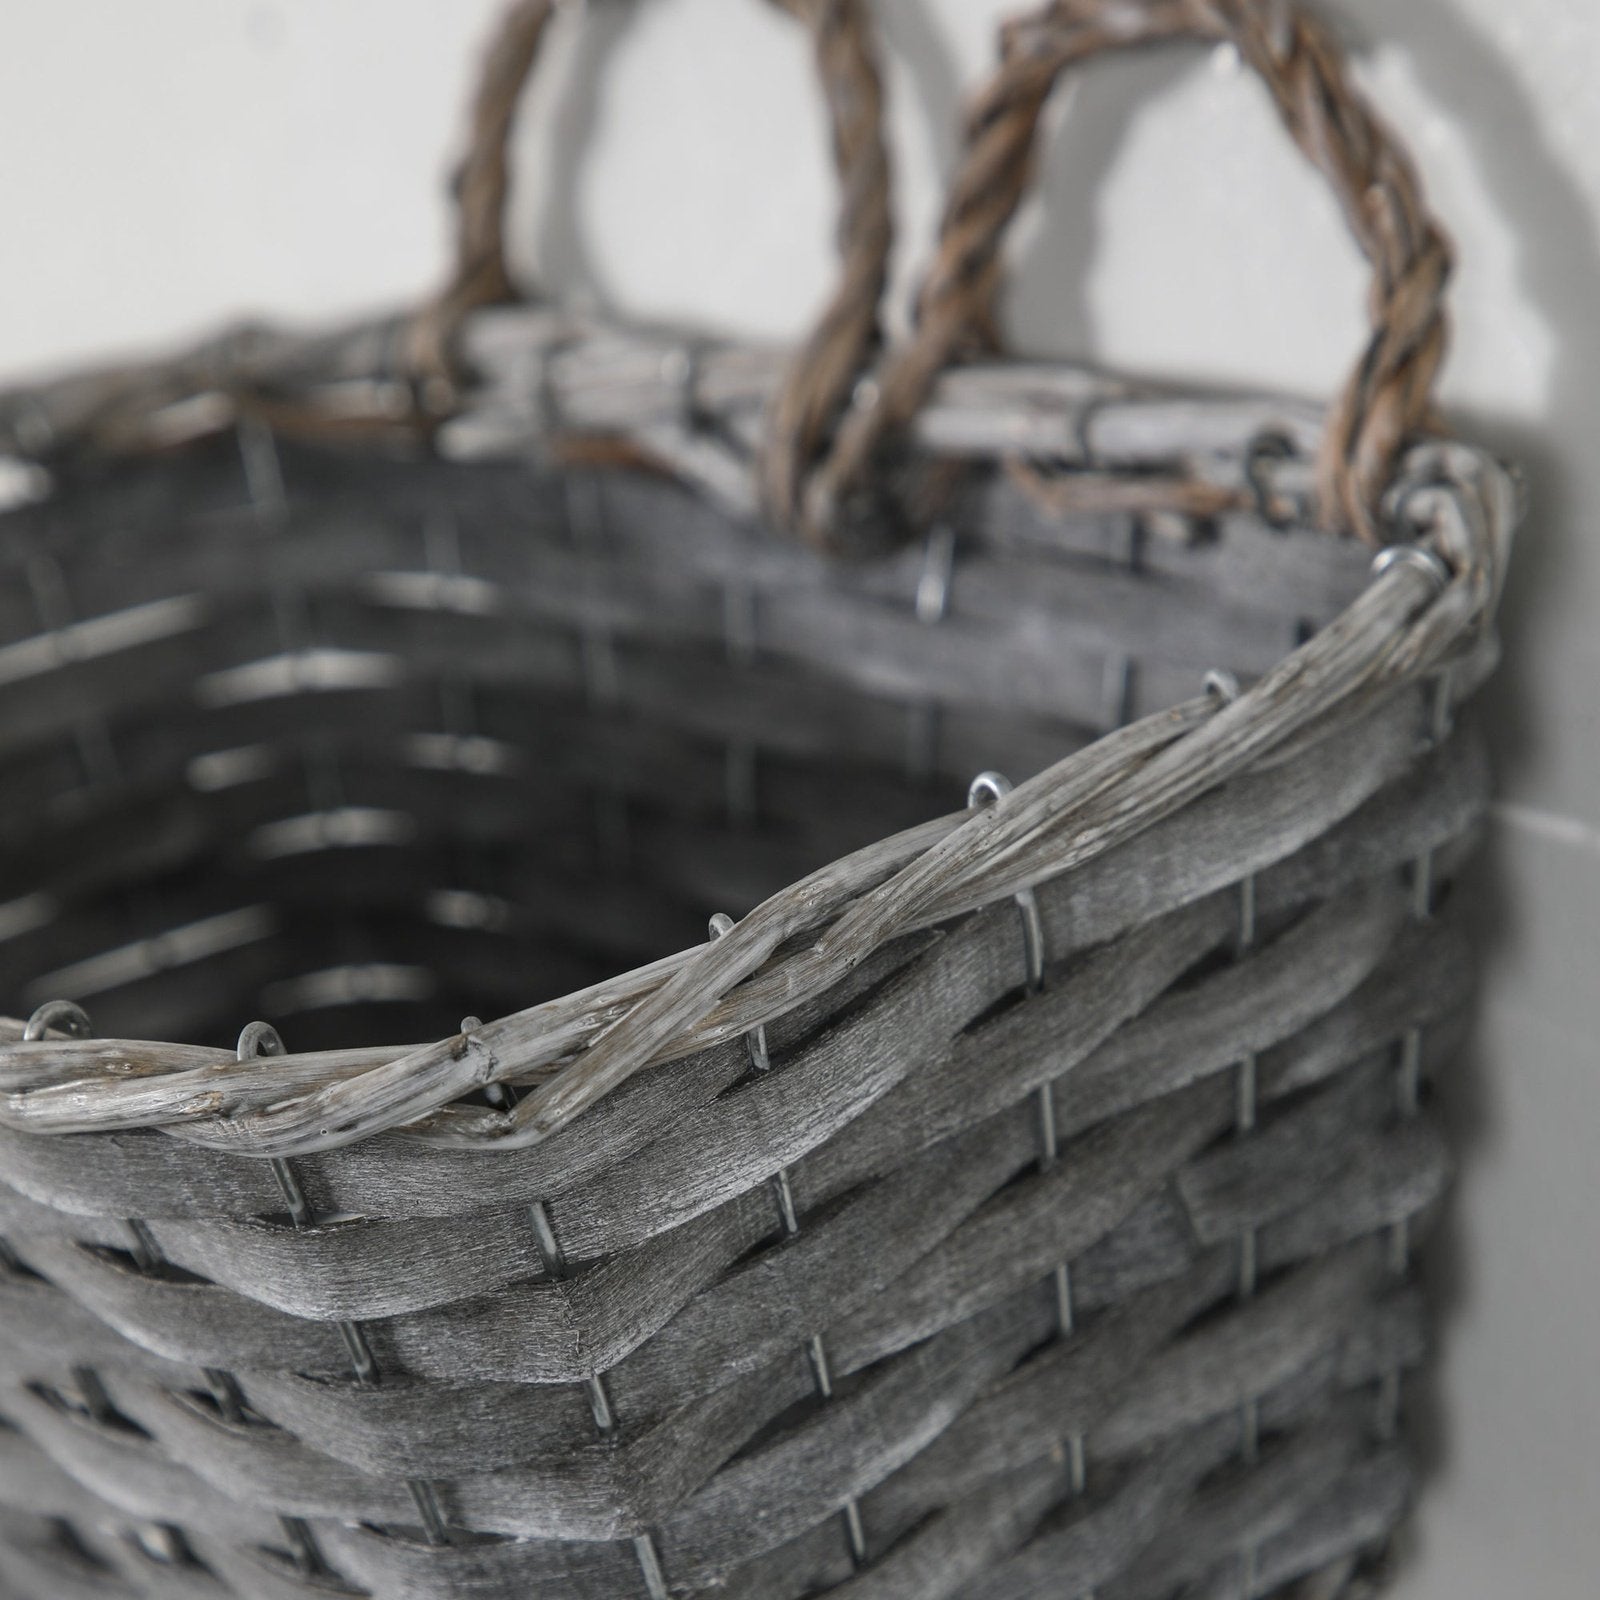 Buxley Hanging Basket